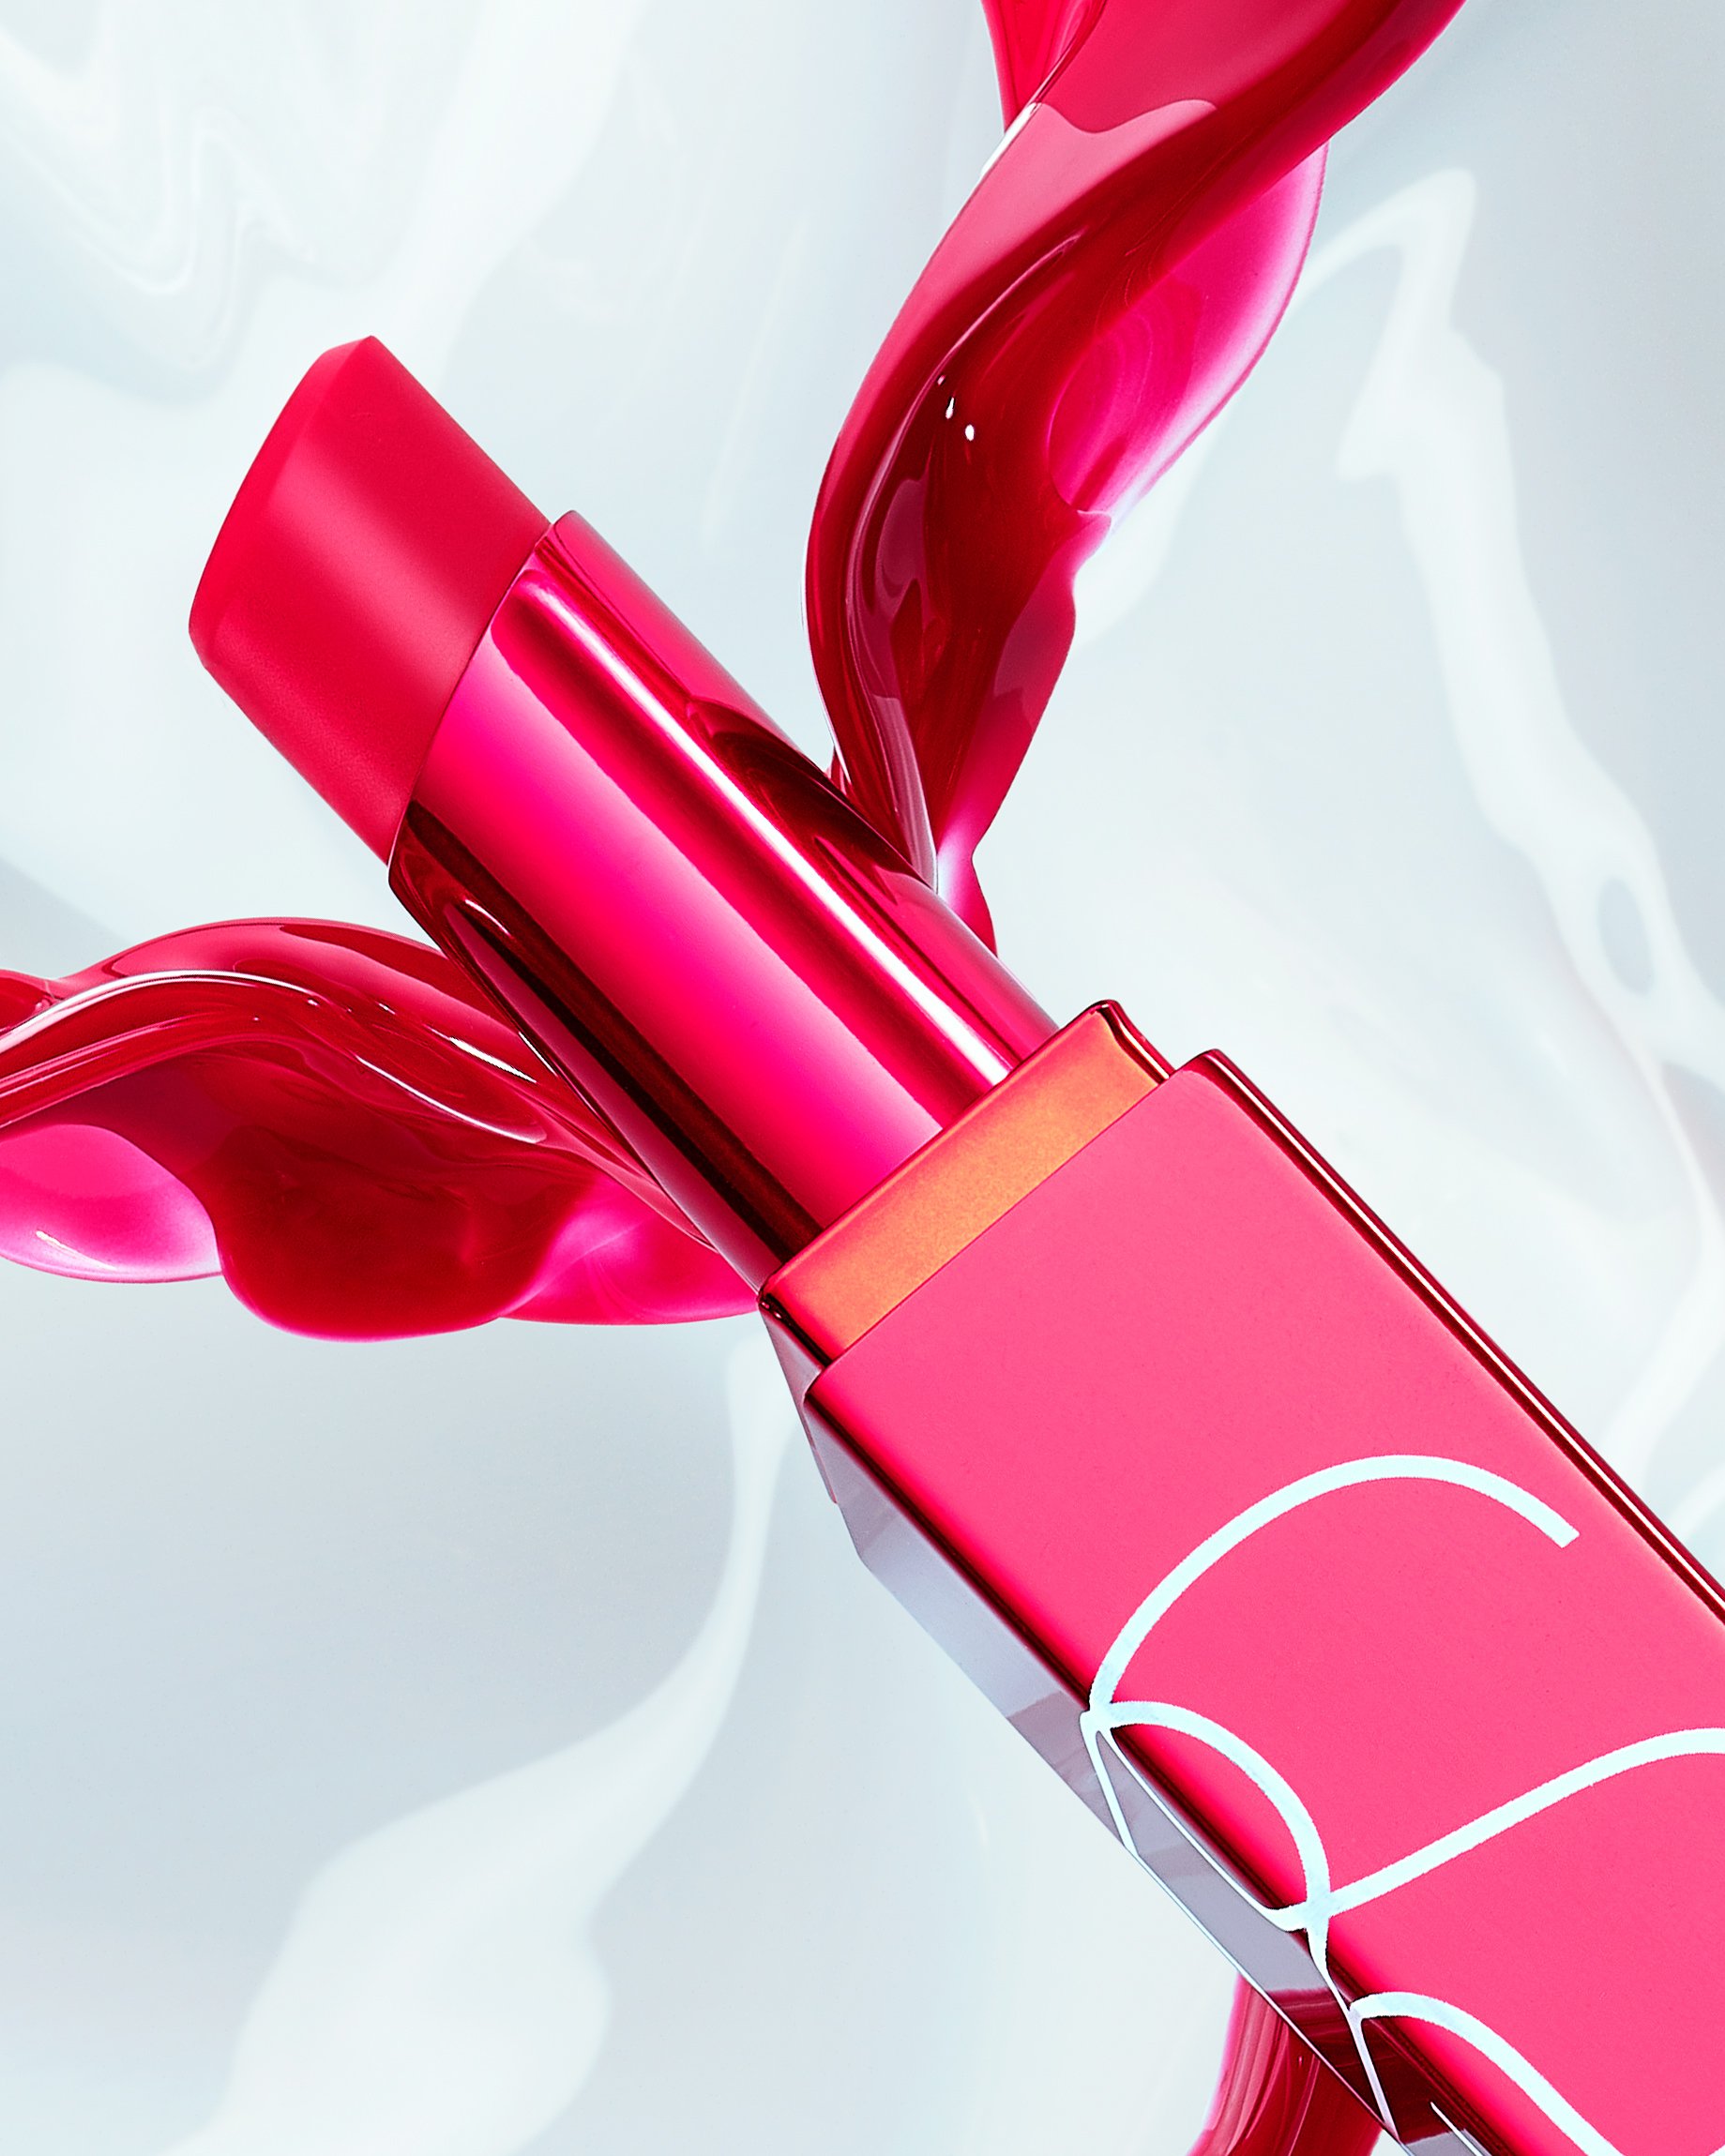 tidepool-BEAM-dan-simmons-lipstick-splash-nar-cosmetic-product-red-liquid-photography_color_closeup.jpeg